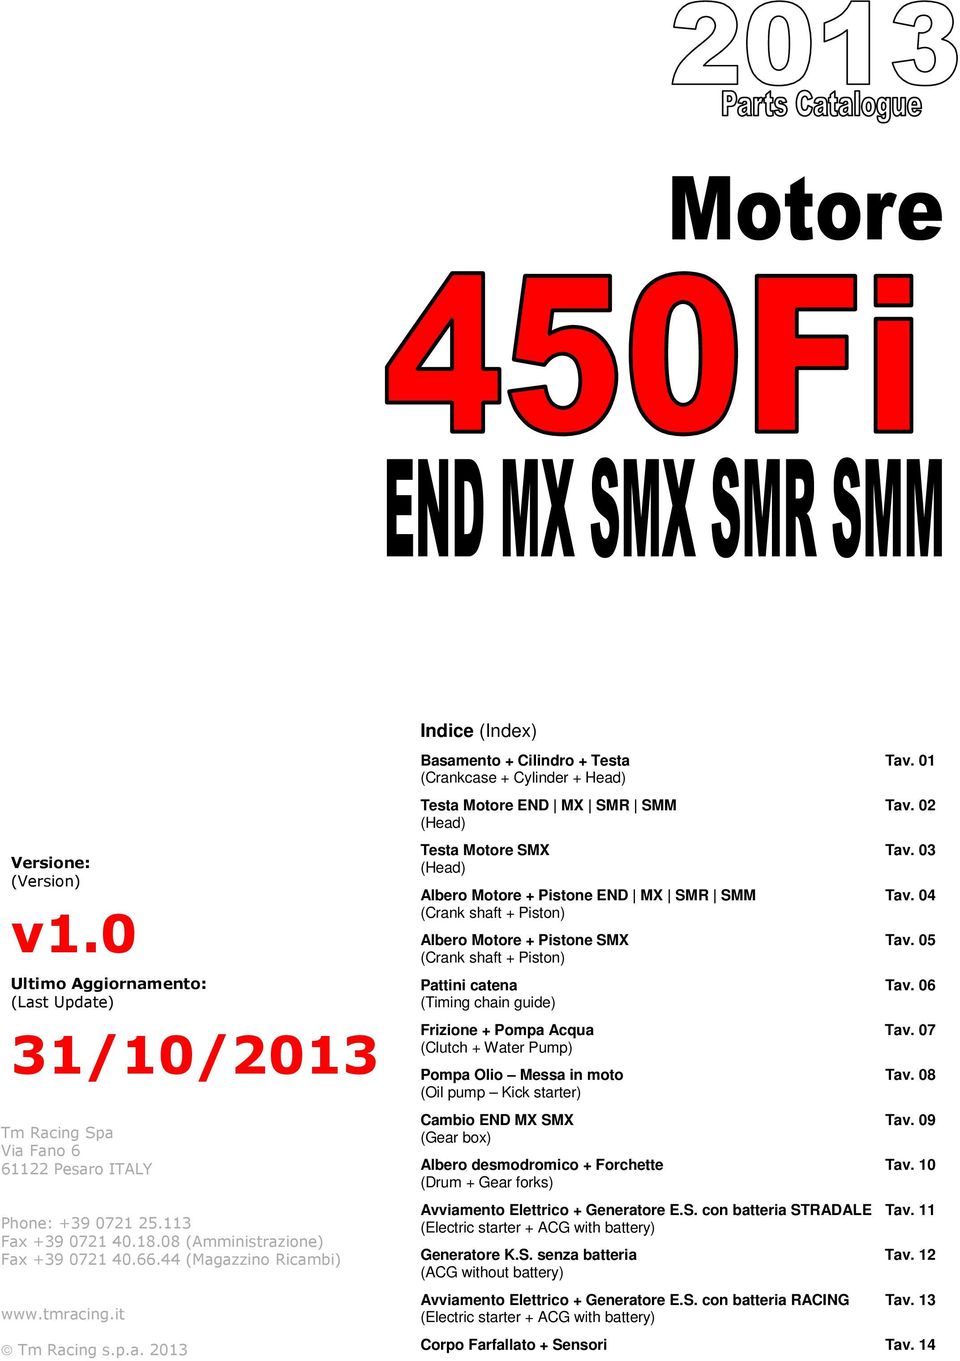 azzino Ricambi) www.tmracing.it Tm Racing s.p.a. 2013 Indice (Index) Basamento + Cilindro + Testa (Crankcase + Cylinder + Head) Testa Motore END MX SMR SMM (Head) Testa Motore SMX (Head) Albero